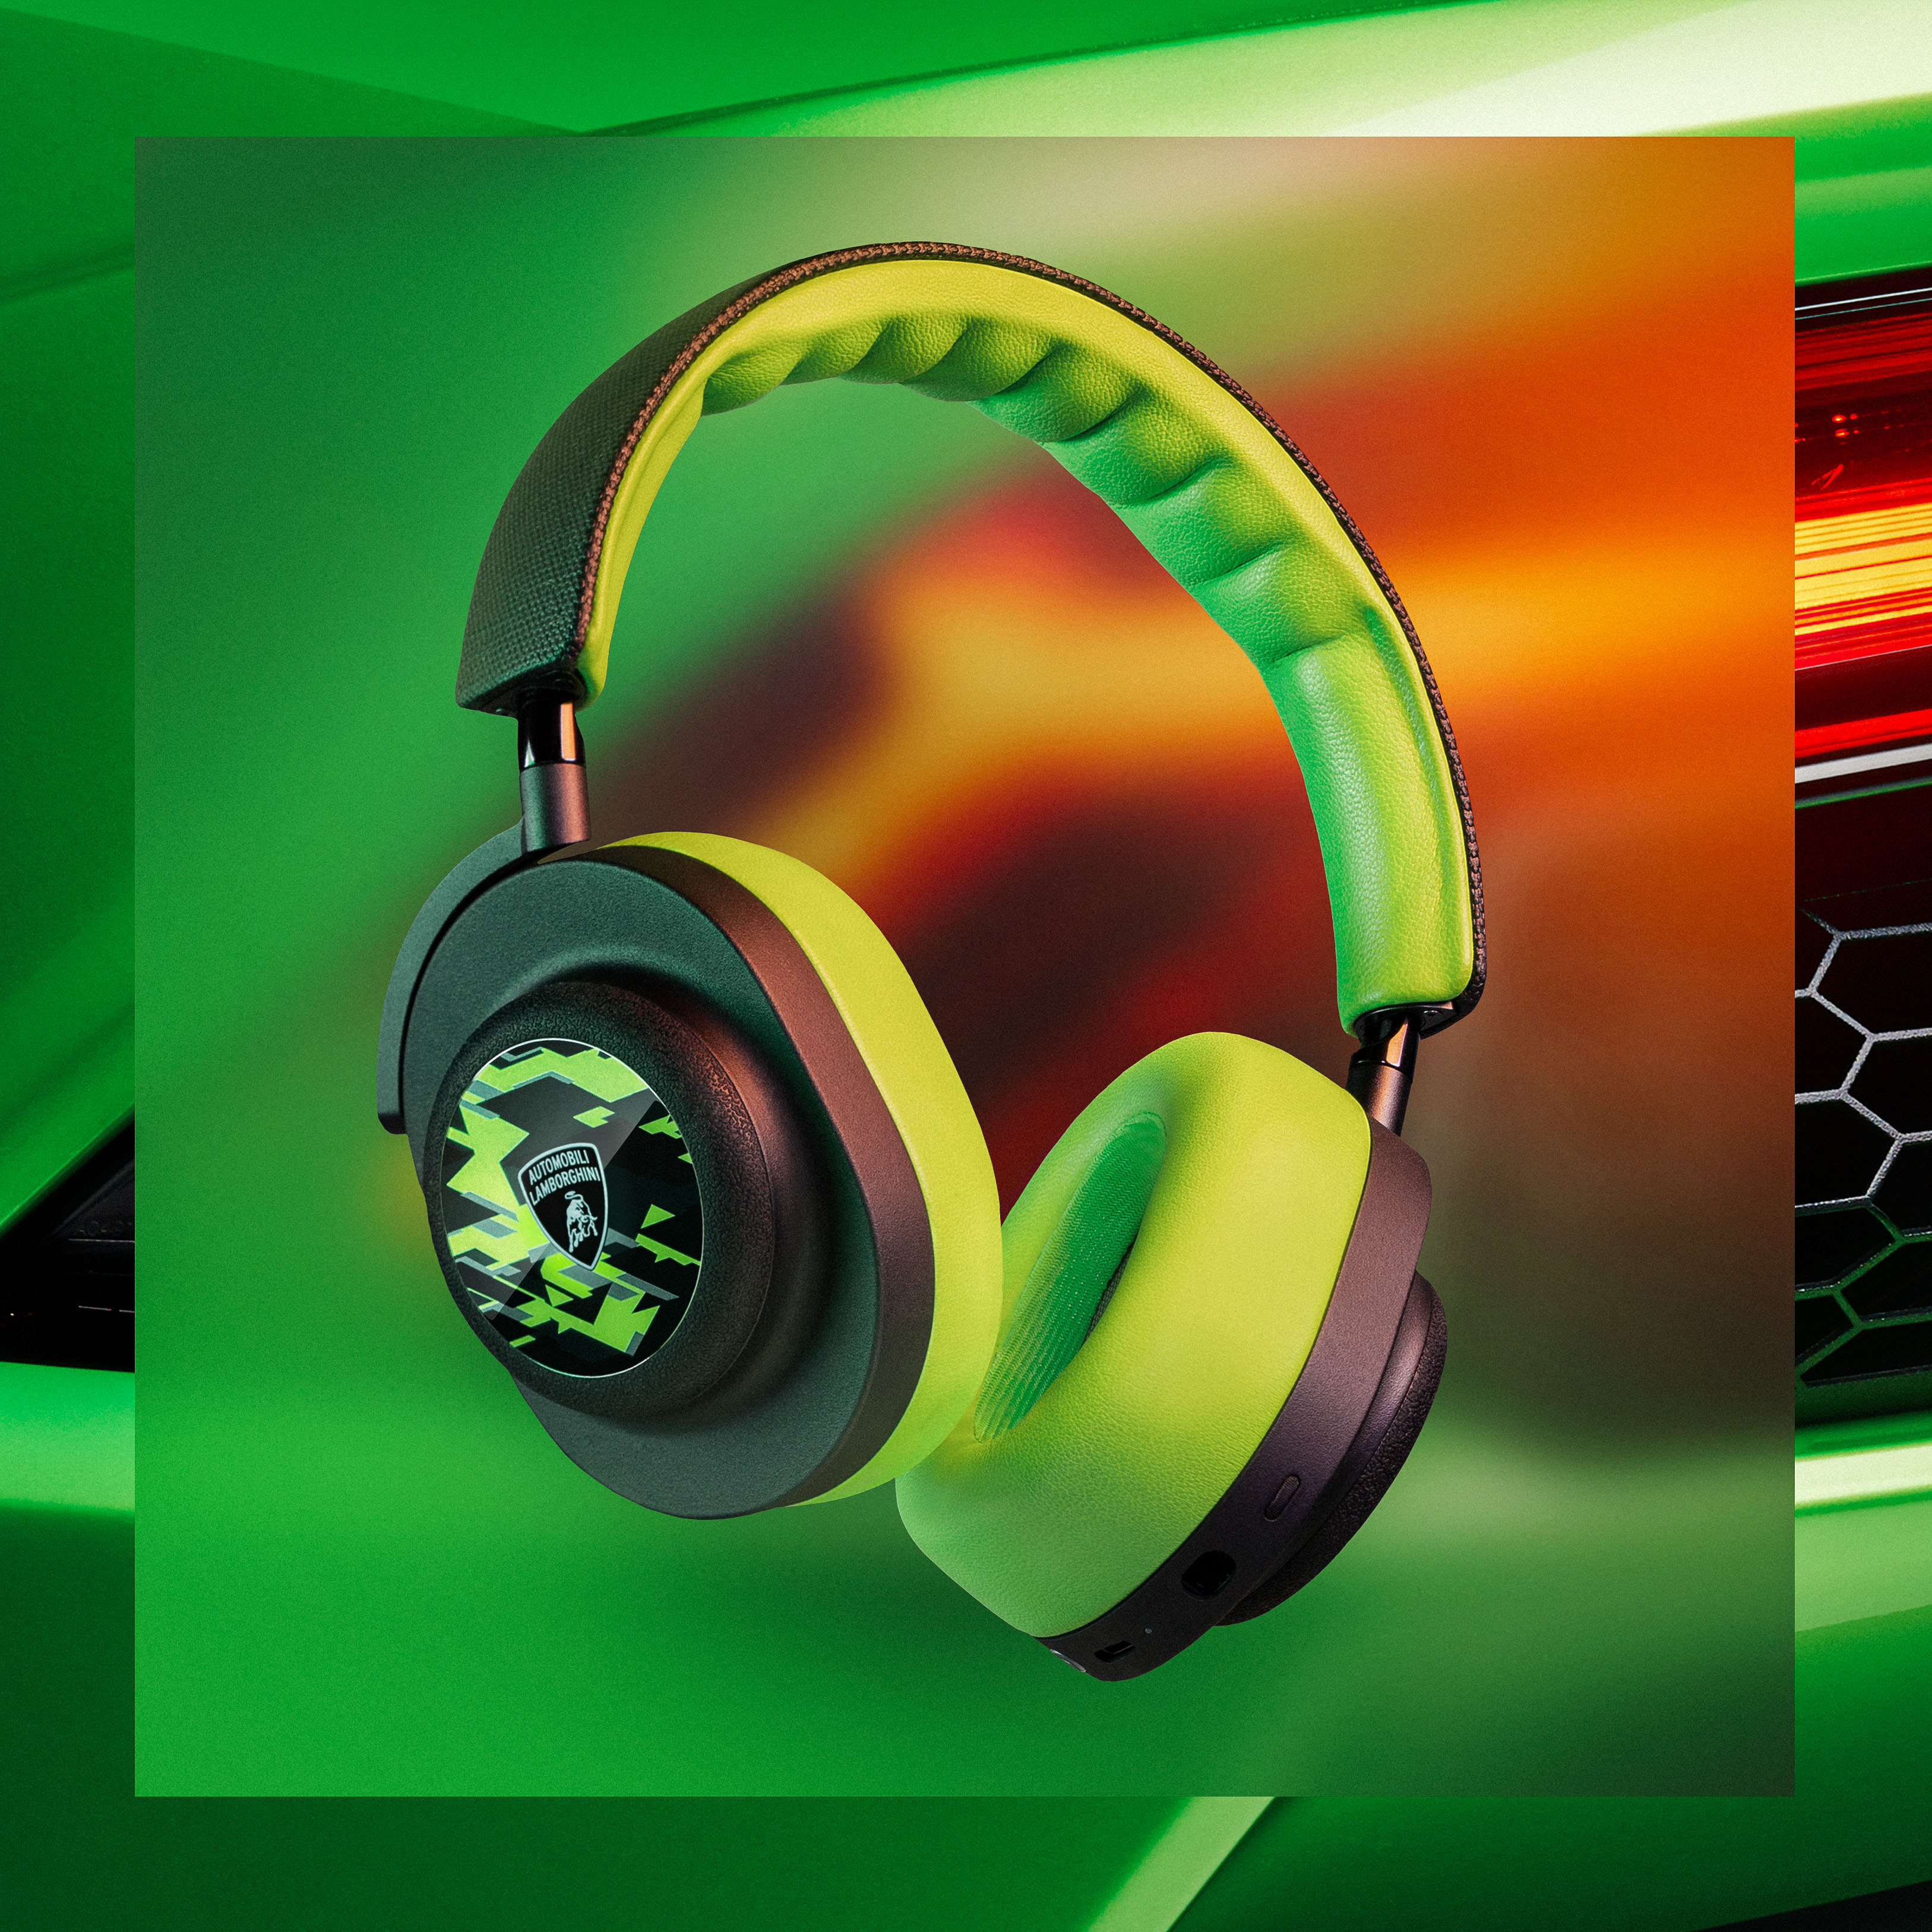 MG20 Gaming Headphones for Automobili Lamborghini